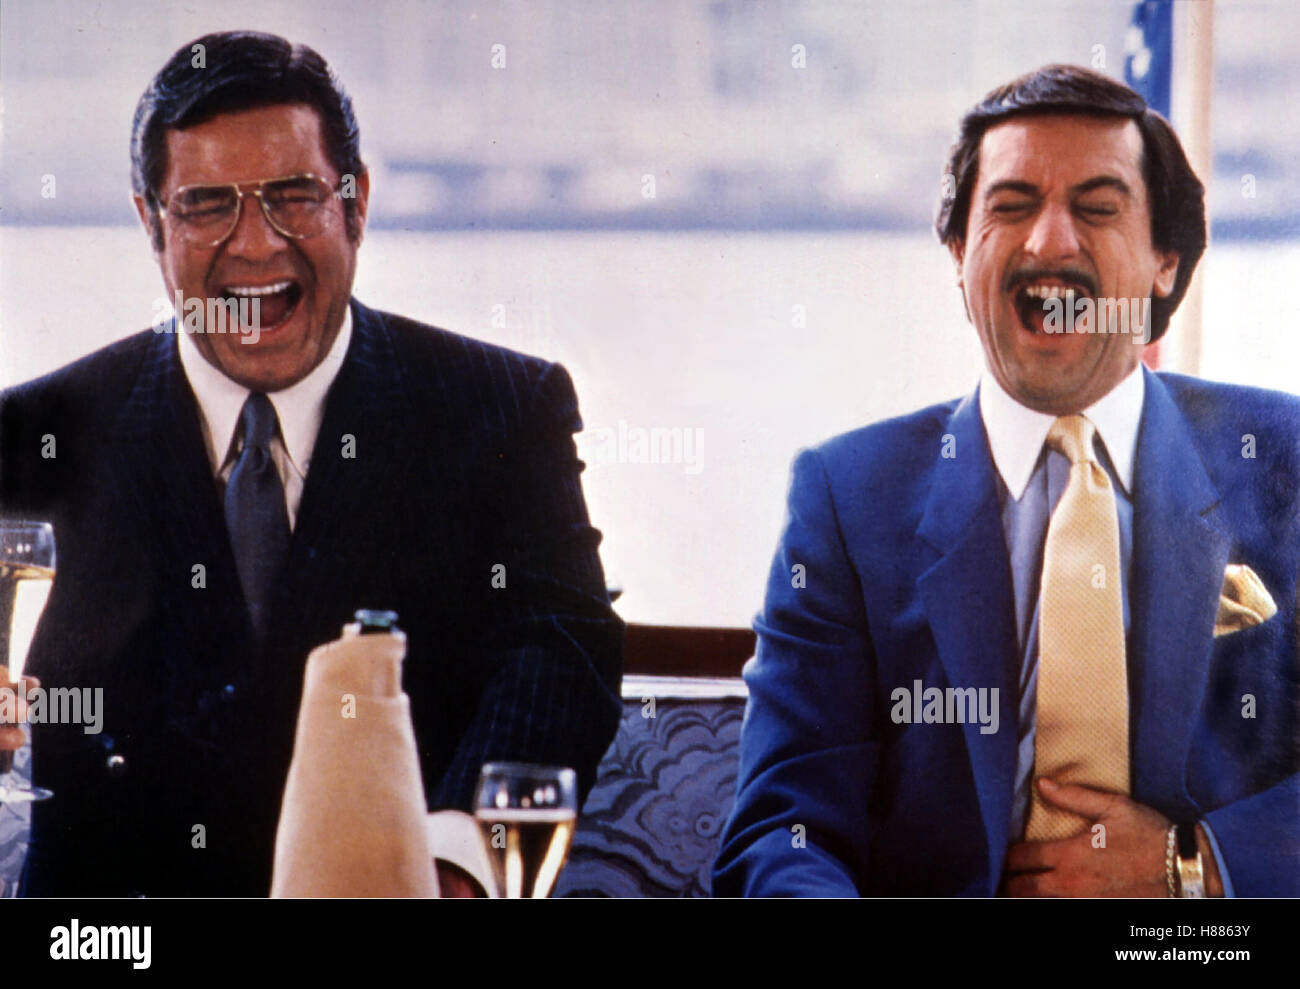 King of Comedy, (THE KING OF COMEDY) USA 1982, Regie: Martin Scorsese, JERRY LEWIS, ROBERT DE NIRO, Stichwort: Lachen, Brille Stock Photo